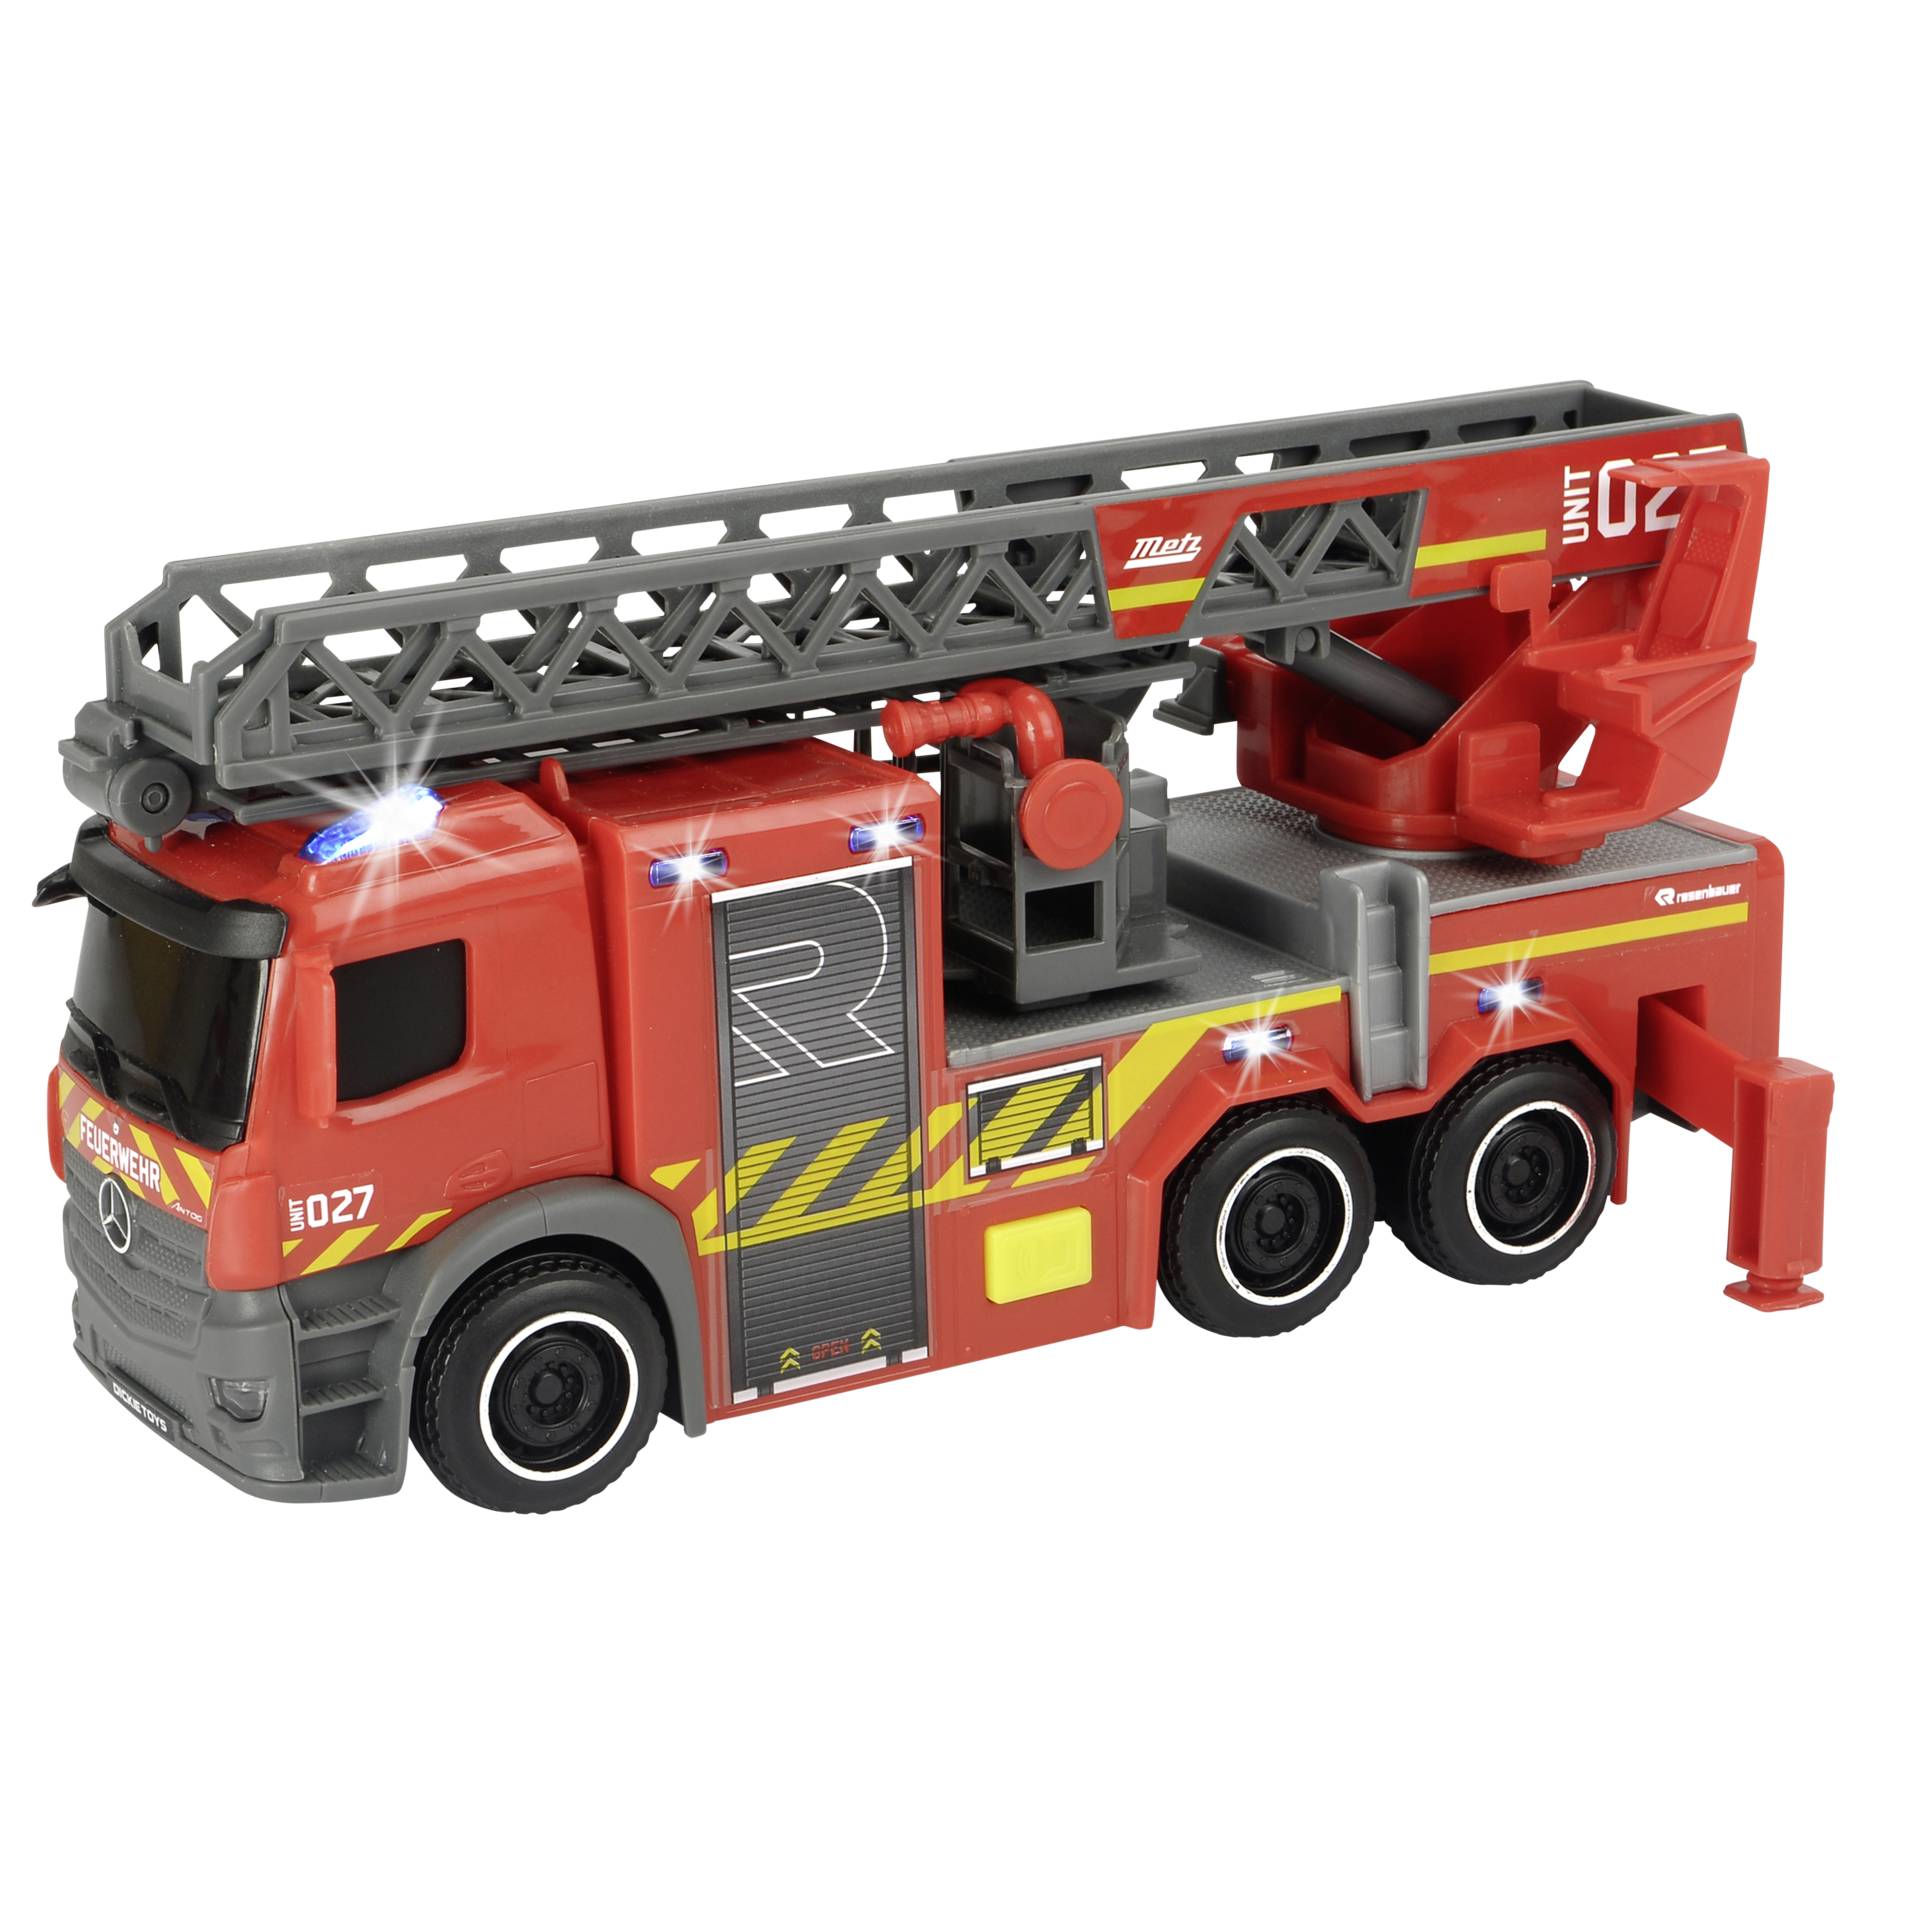 Dickie Fire Brigade turntable ladder                 2037140